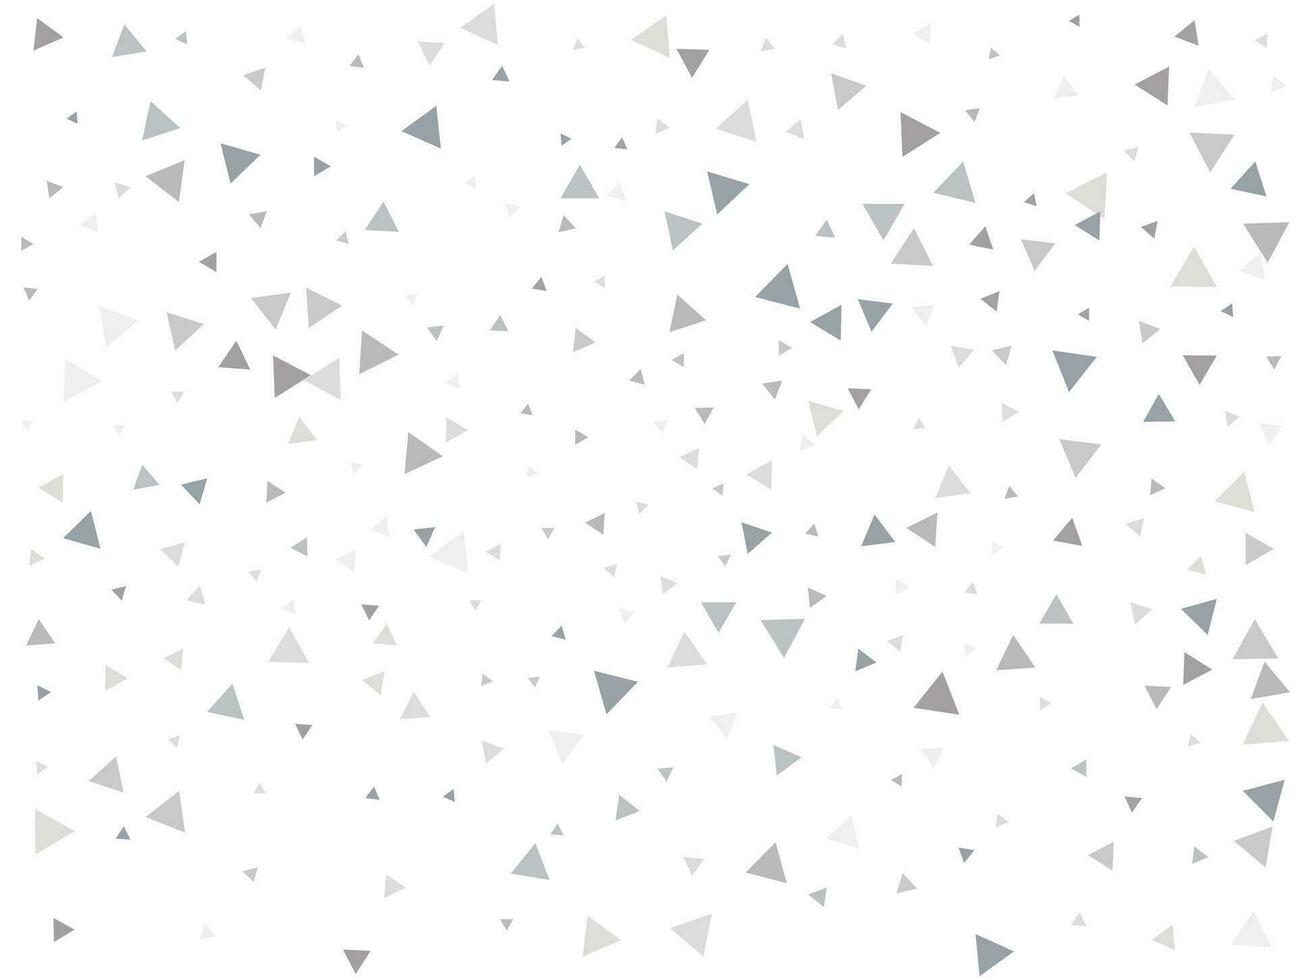 Navidad ligero plata triangular Brillantina papel picado antecedentes. blanco festivo textura vector